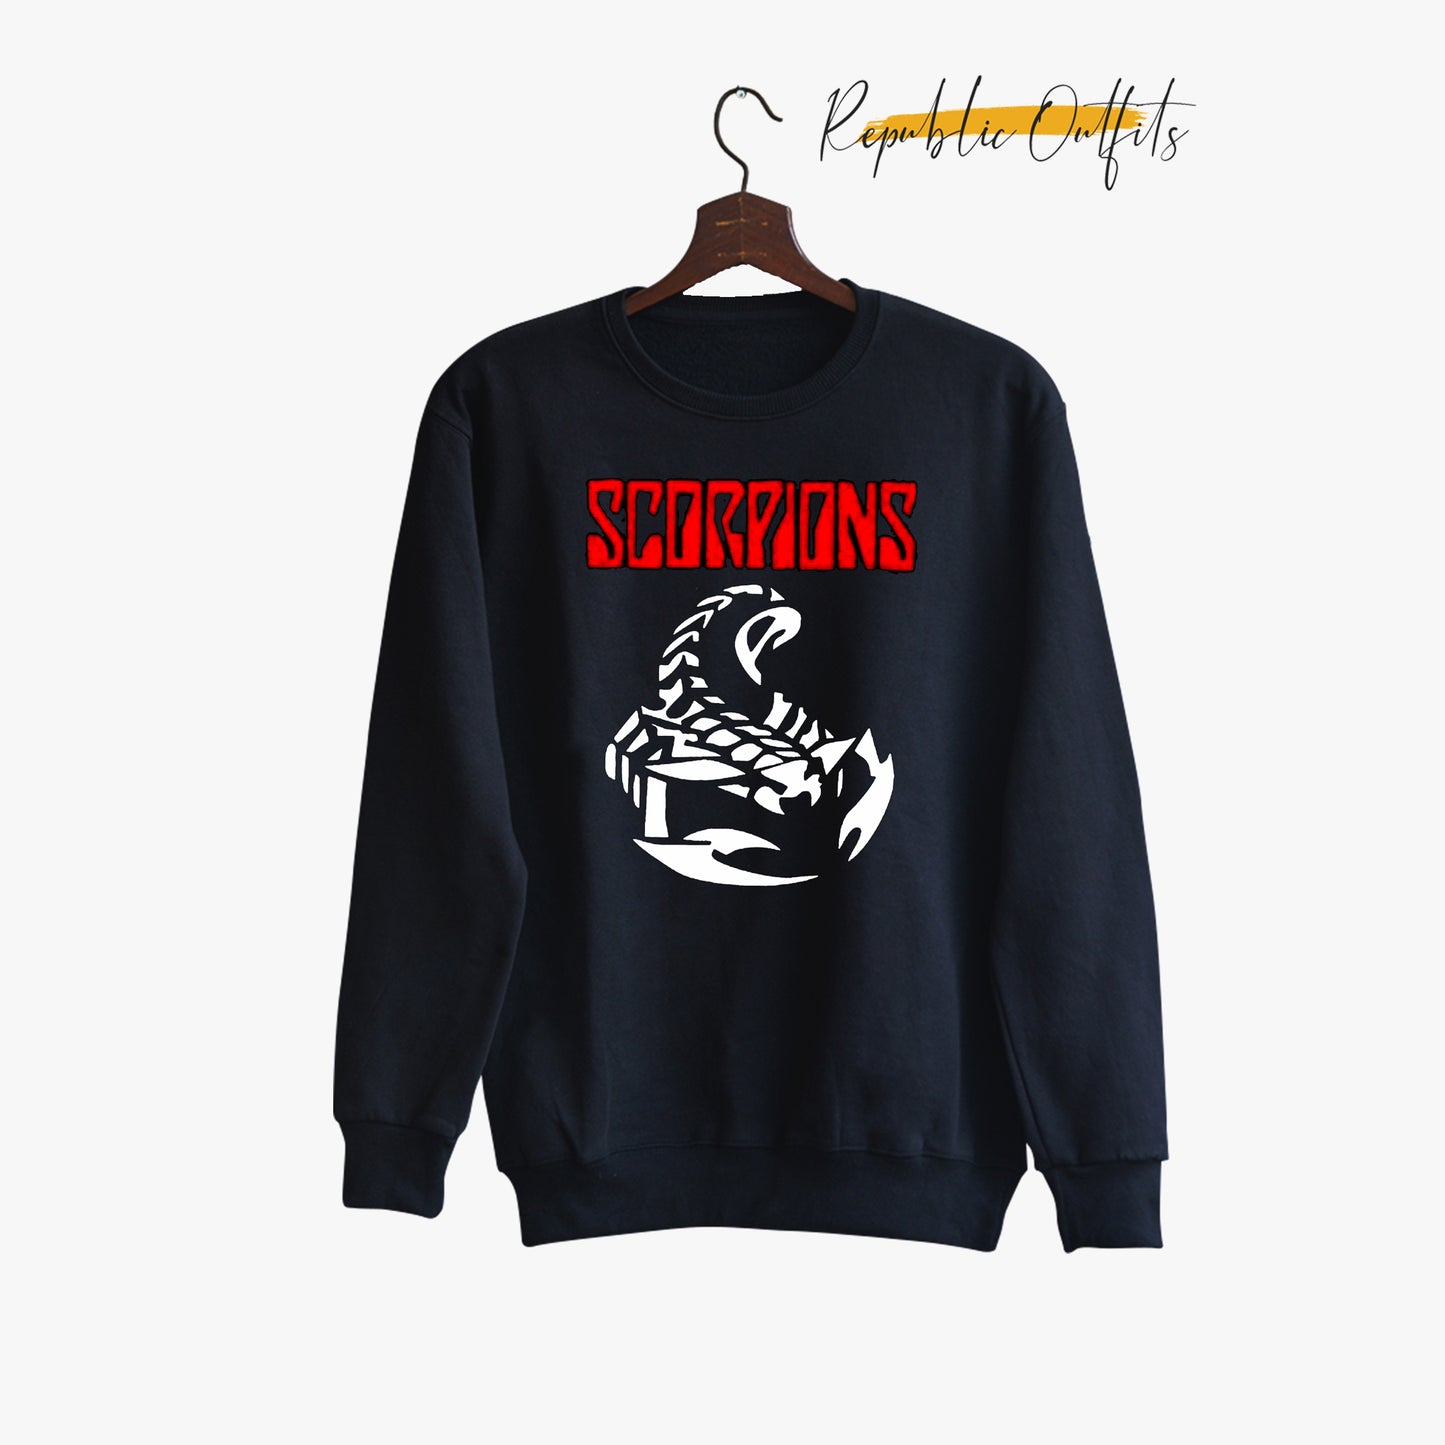 Scorpions Red Sweatshirt